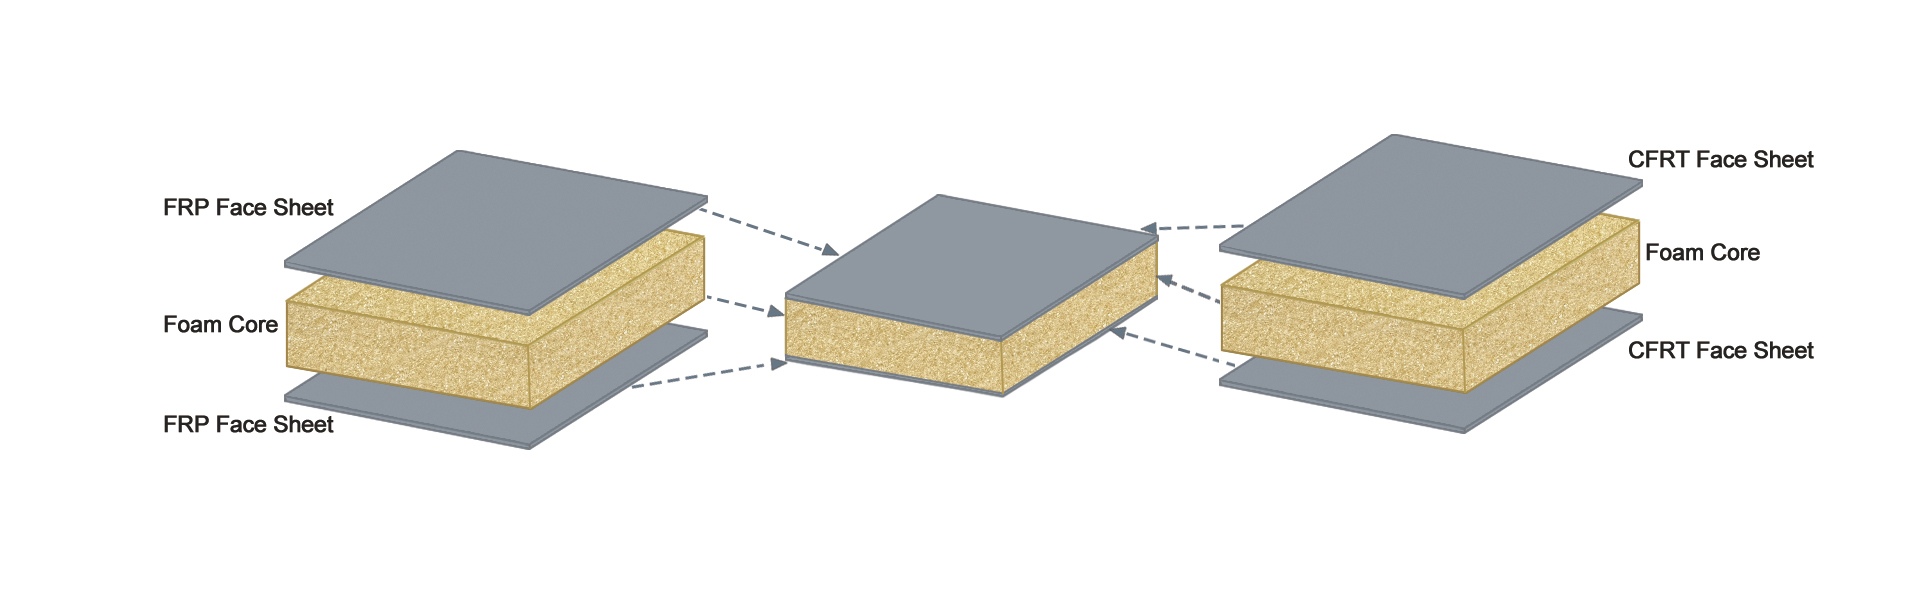 FRP PVC foam sandwich panel structure